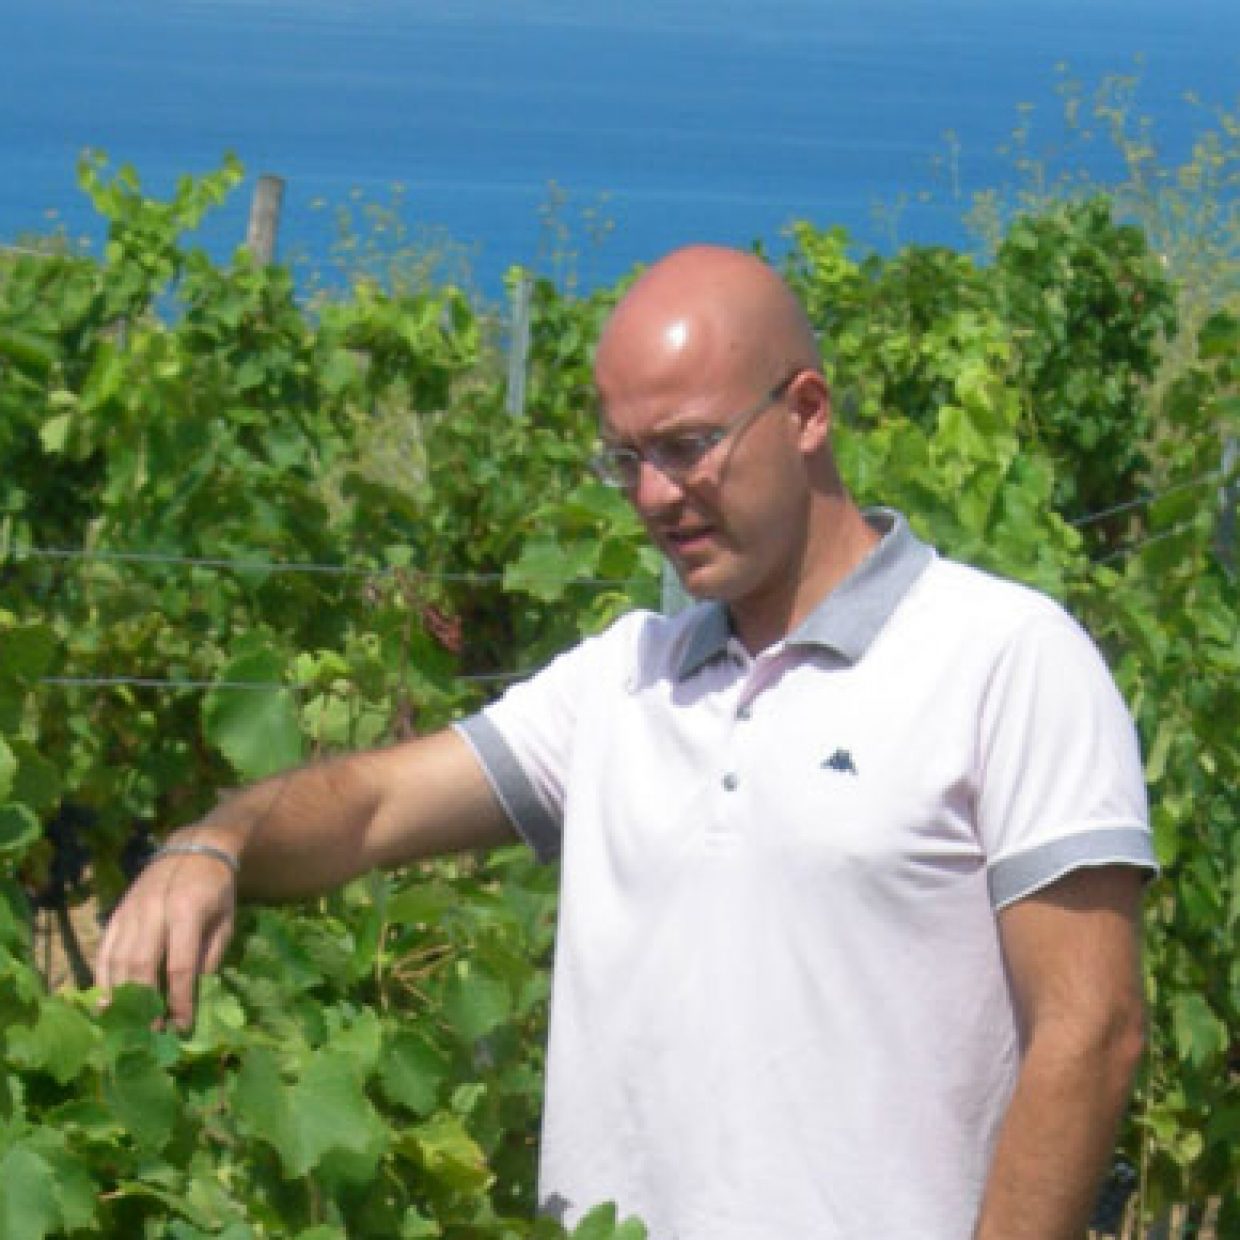 Dott. Emiliano Falsini, the Winemaker